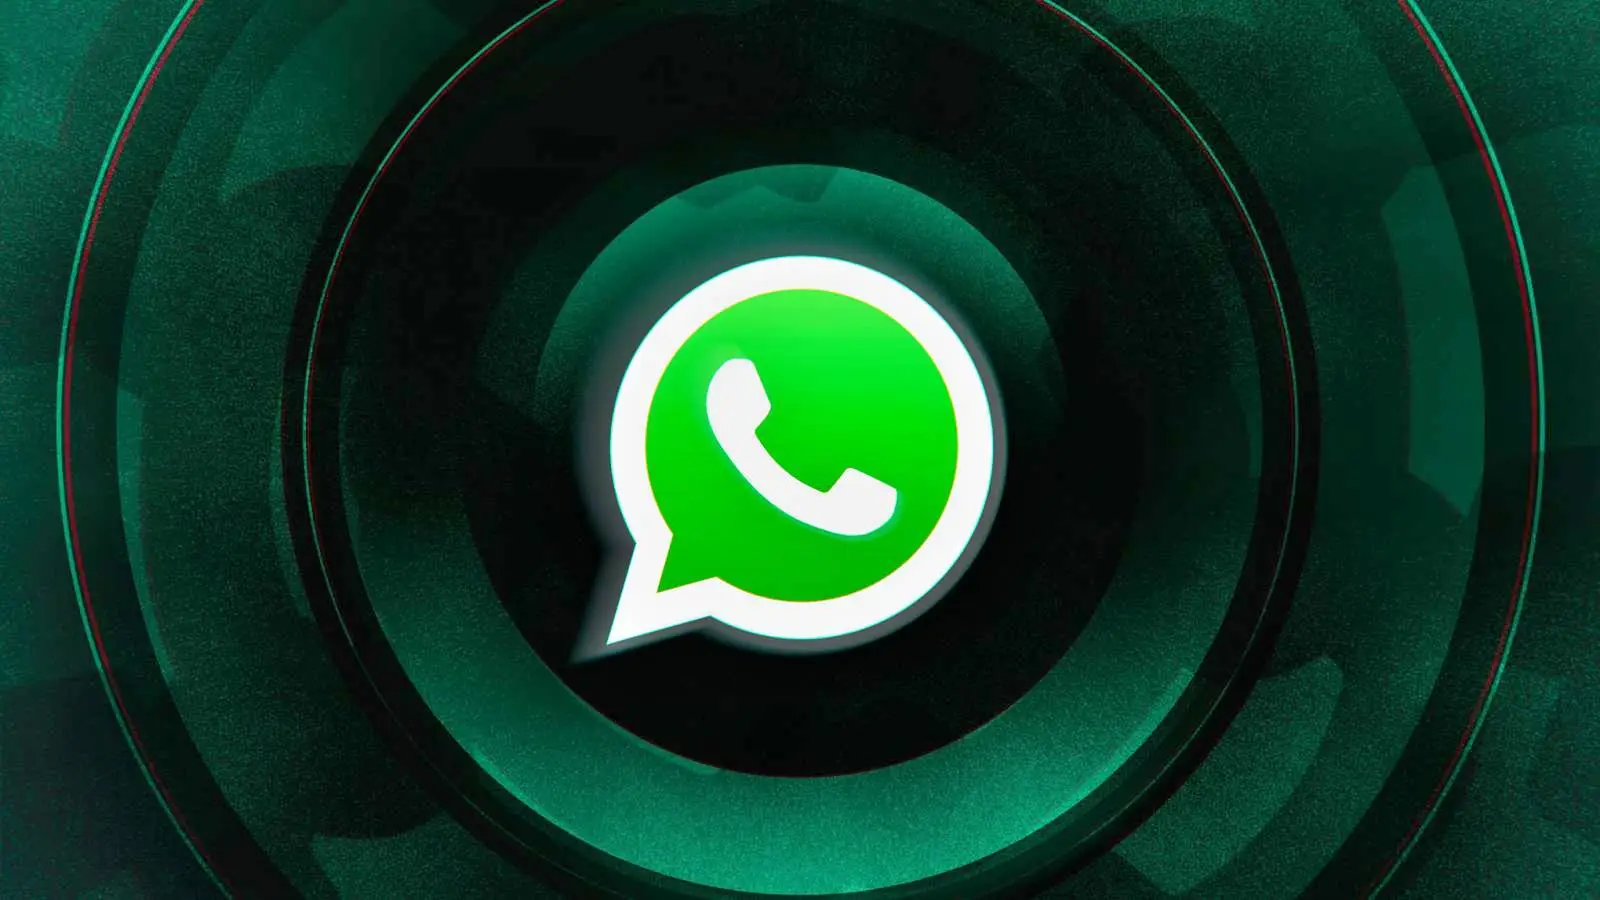 WhatsApp laver en stor ÆNDRING i iPhone Android-appen